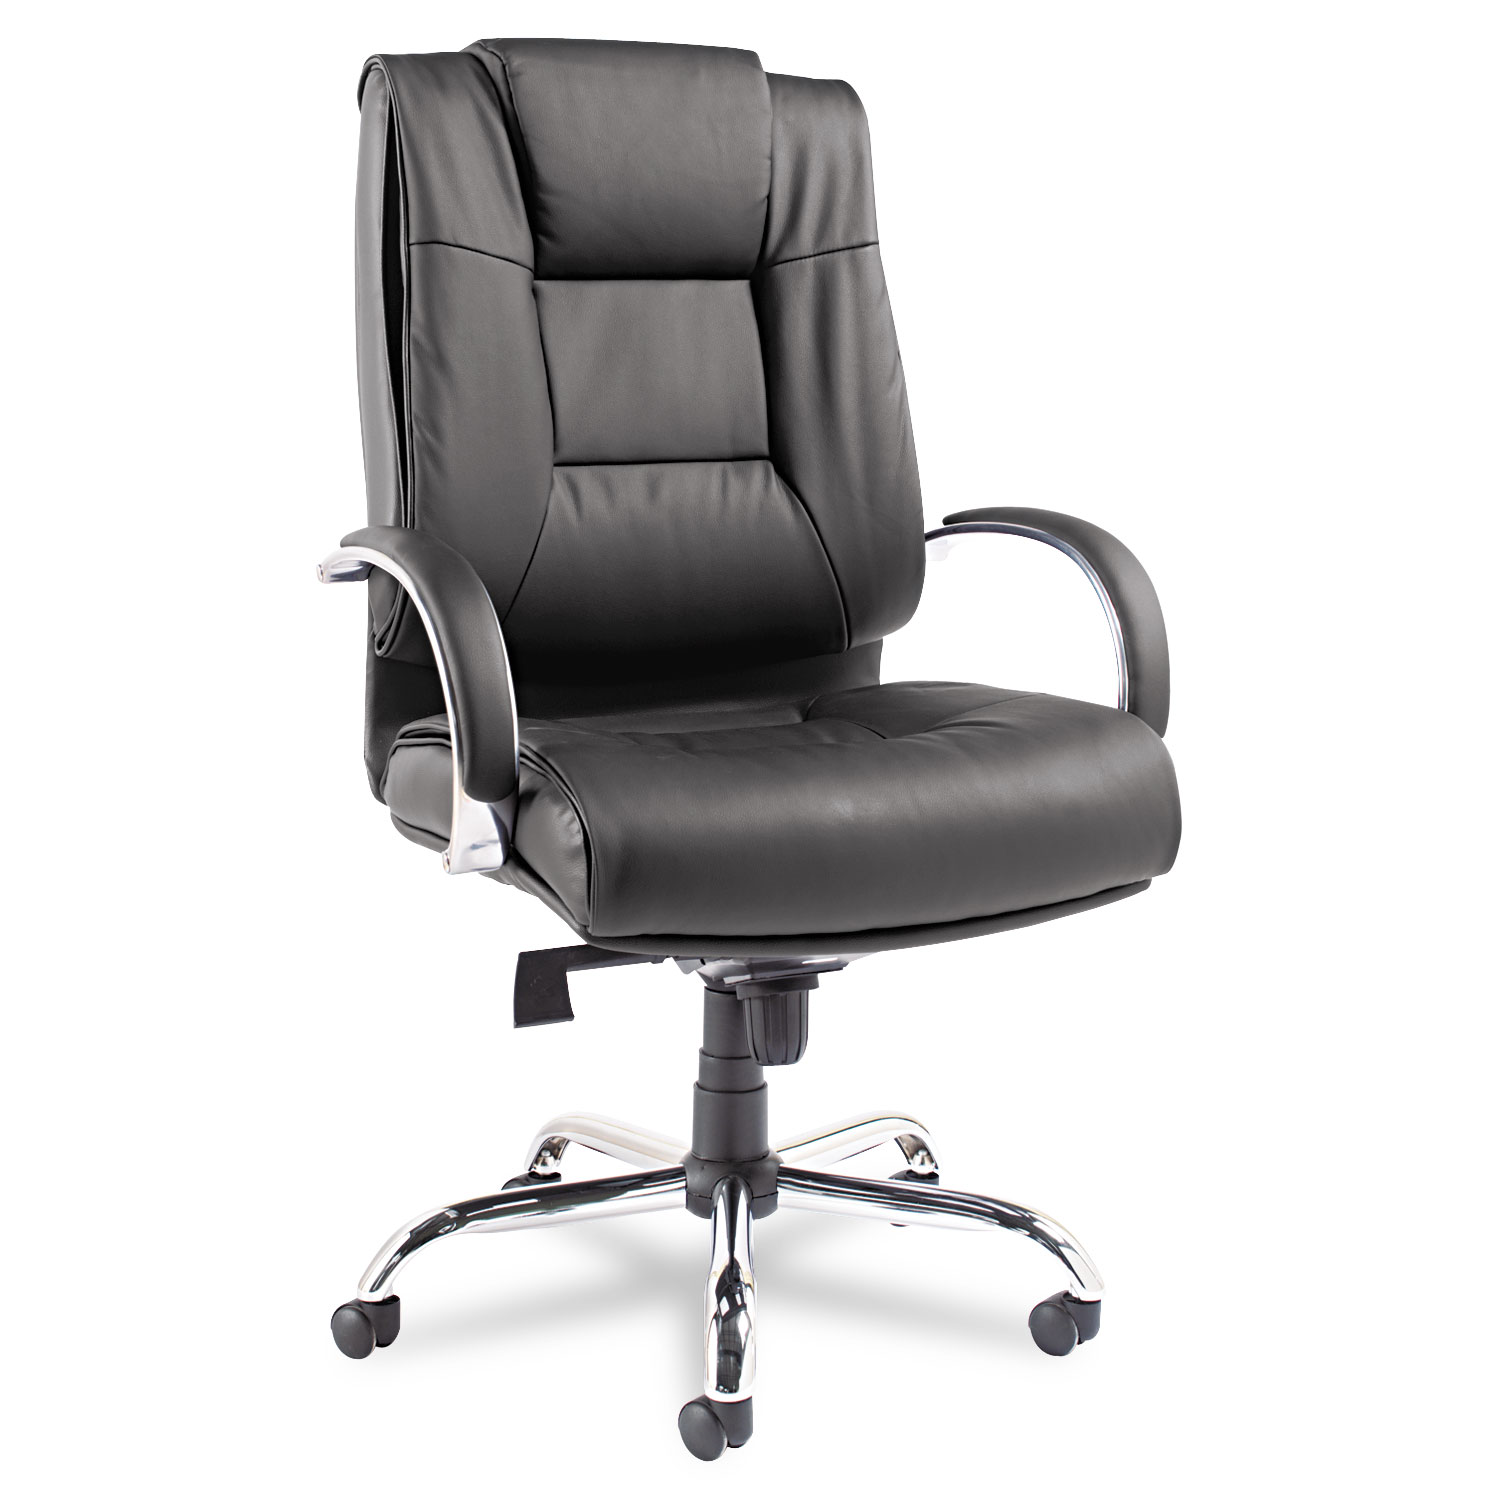  Alera ALERV44LS10C Alera Ravino Big and Tall Series High-Back Swivel/Tilt Leather Chair, Supports up to 450 lbs., Black Seat/Back, Chrome Base (ALERV44LS10C) 